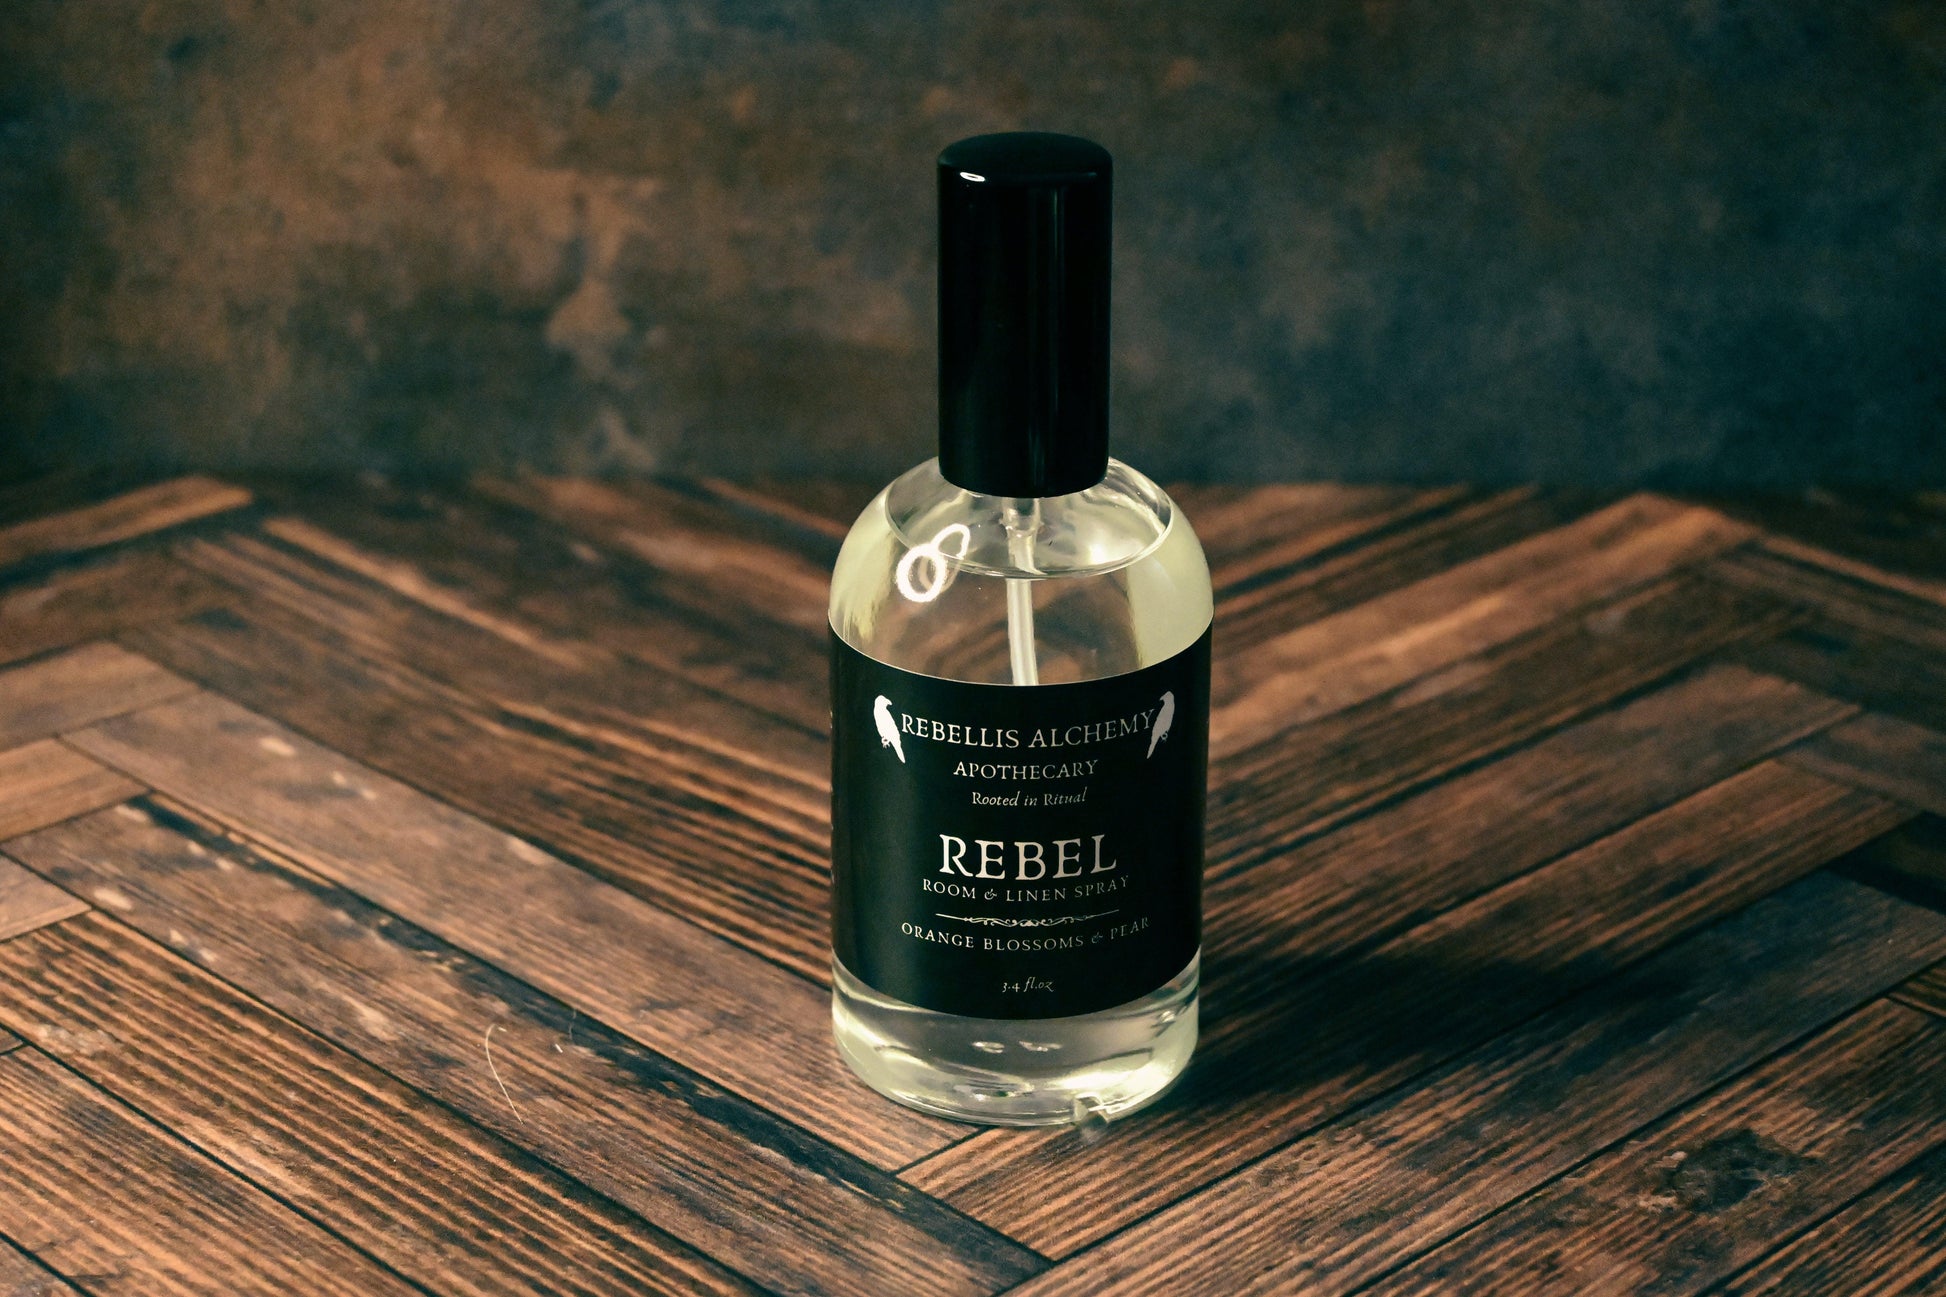 Room & Linen Sprays | Rebellis Alchemy